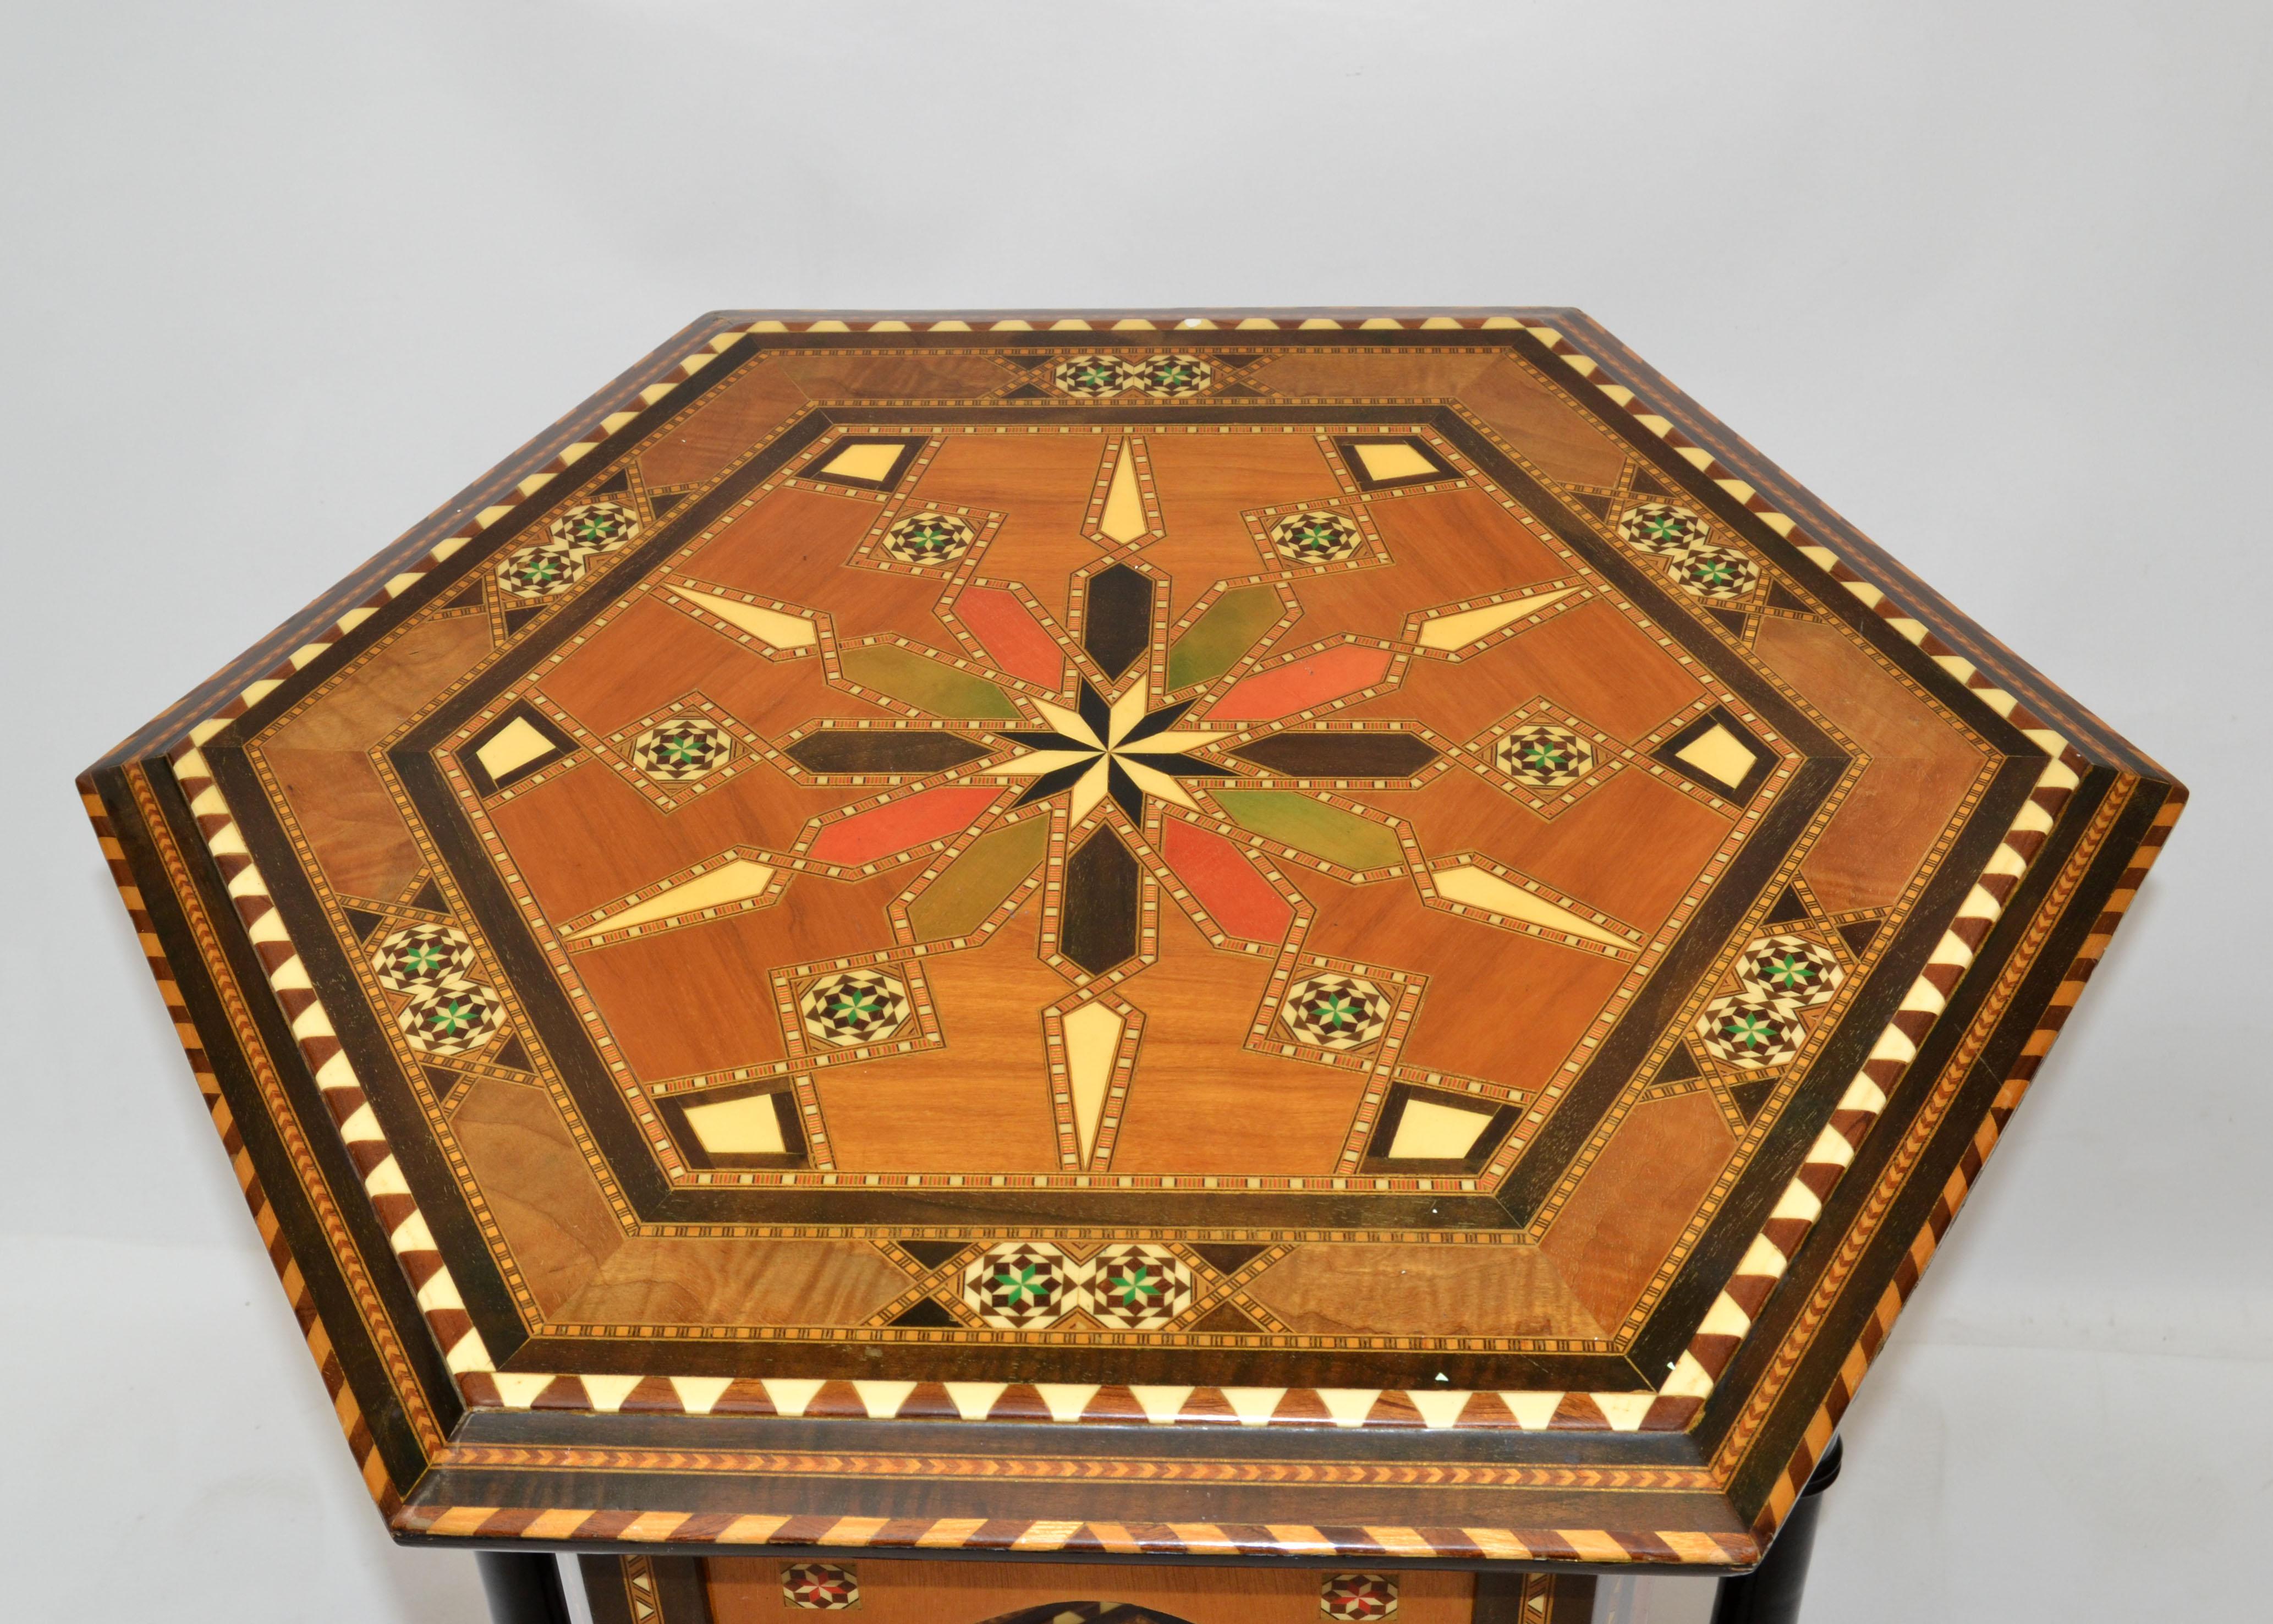 Mid-Century Modern Table centrale marocaine artisanale hexagonale en bois fruitier du milieu du siècle dernier en vente